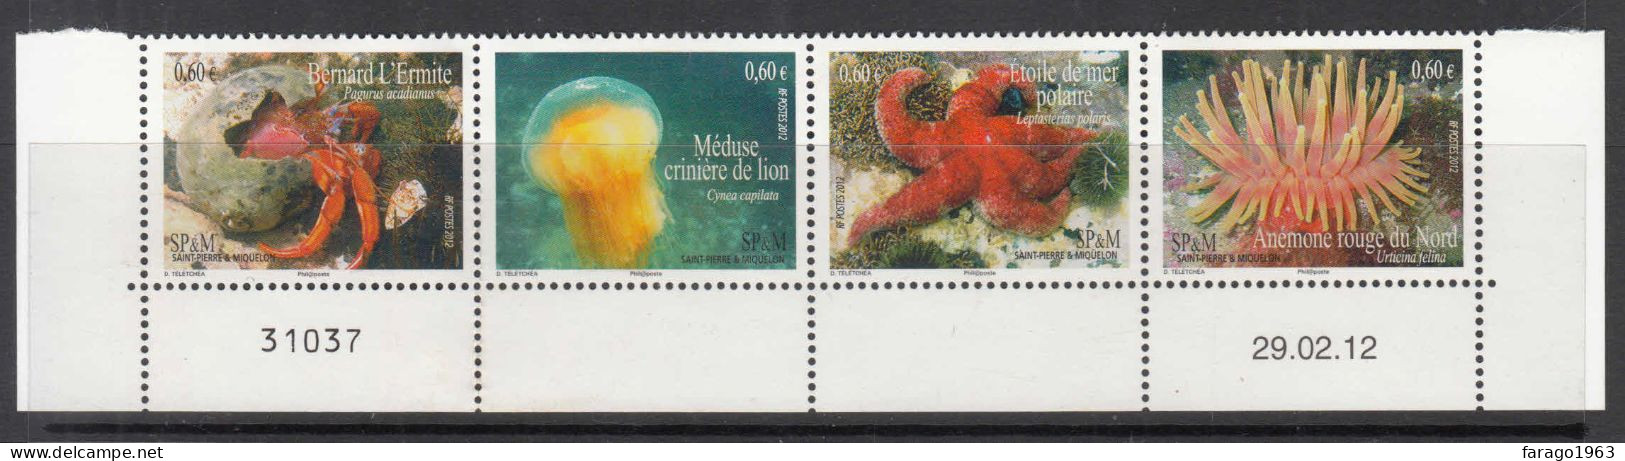 2012 St. Pierre Et Miquelon SPM Marine Life Complete Strip Of 4 MNH @ BELOW FACE VALUE - Unused Stamps